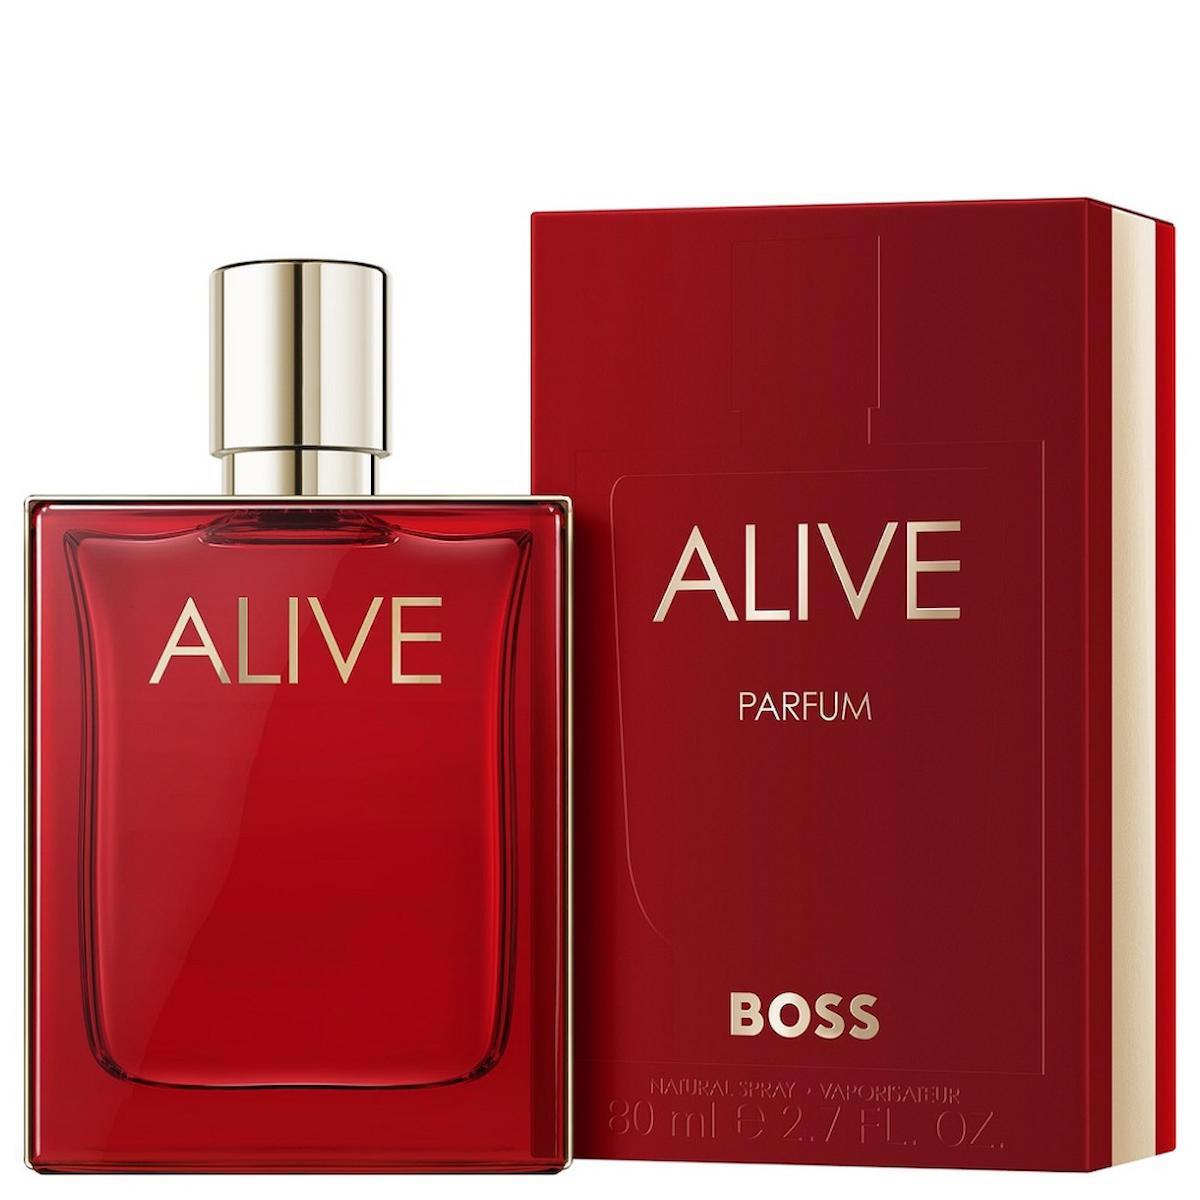 Boss Alive EDP Meyvemsi-Odunsu Kadın Parfüm 80 ml